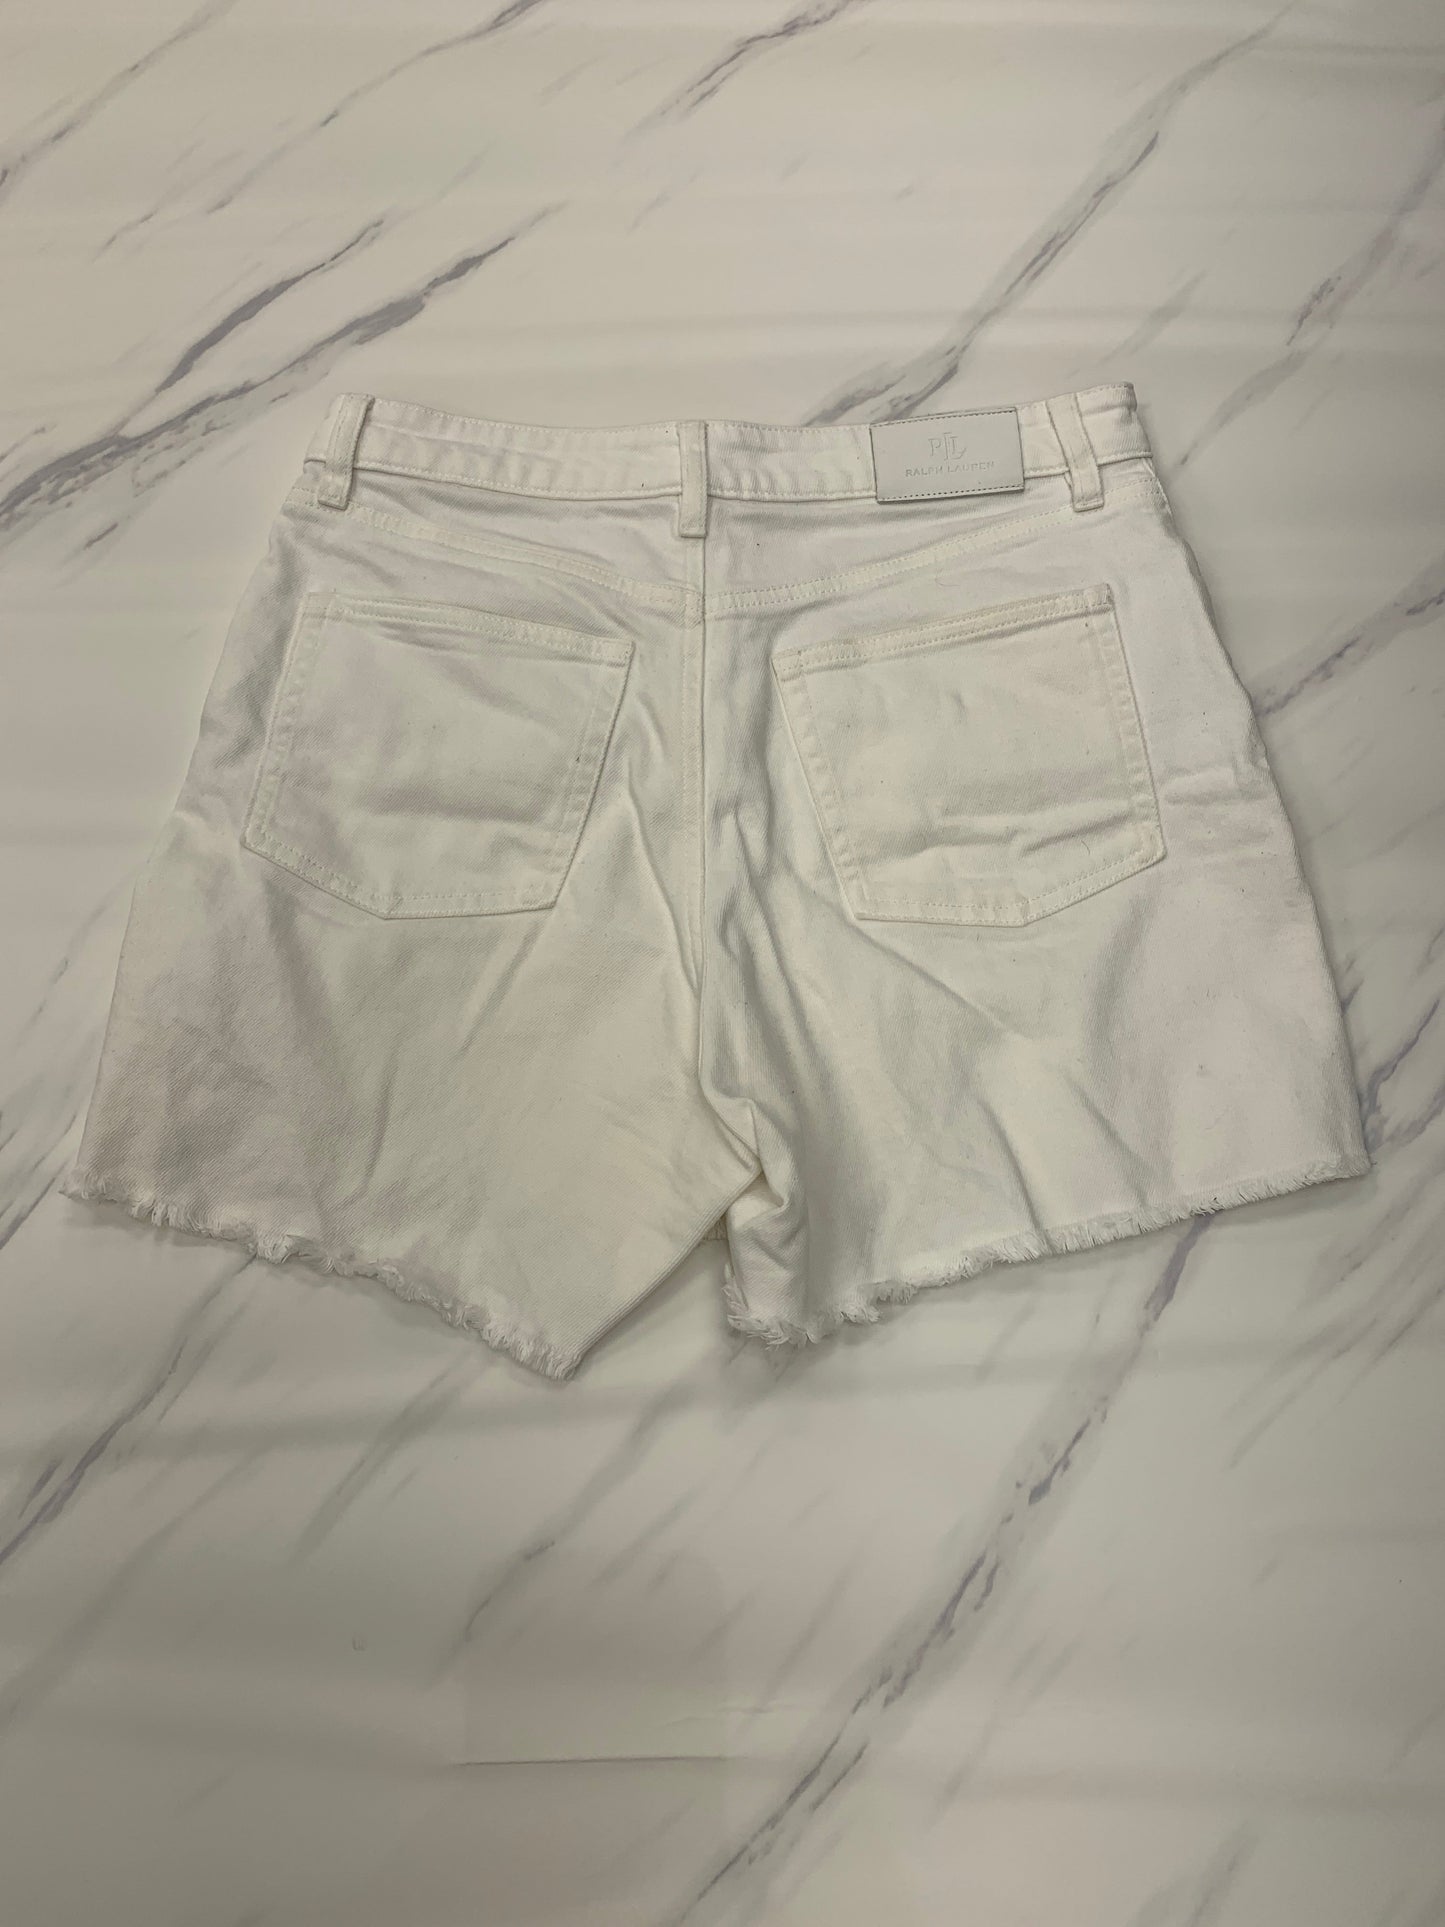 Shorts By Lauren By Ralph Lauren  Size: 8